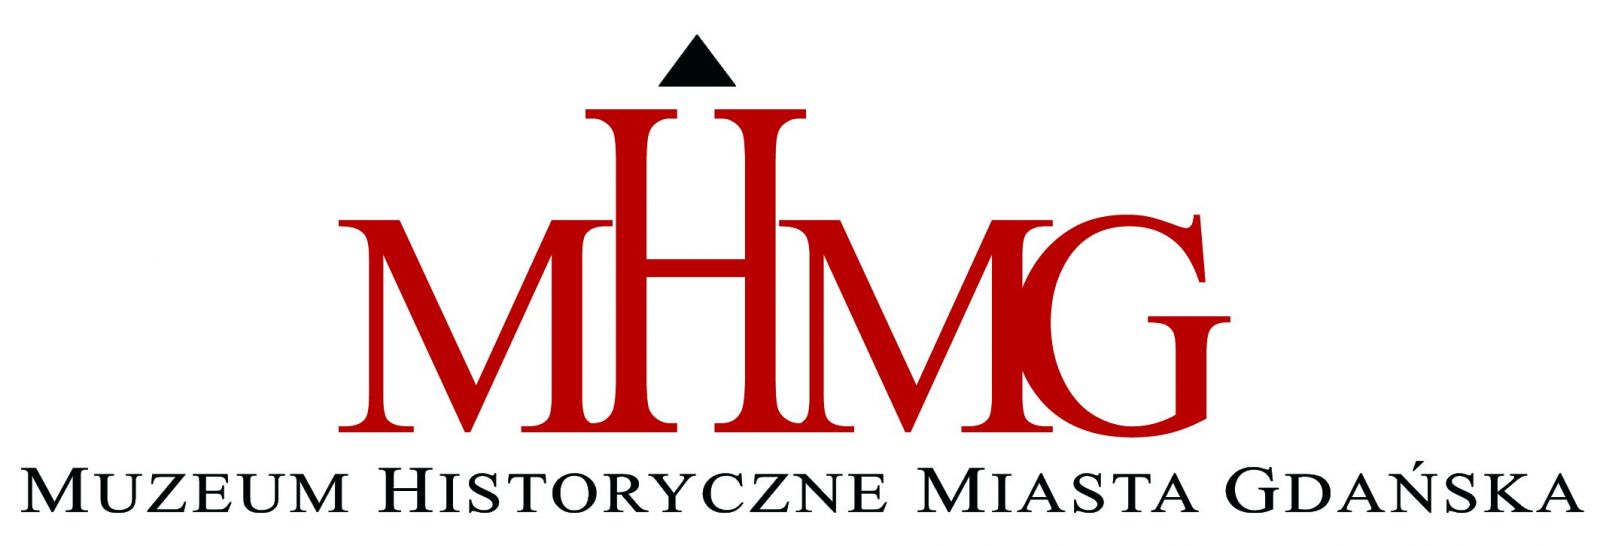 Logo MHMG1